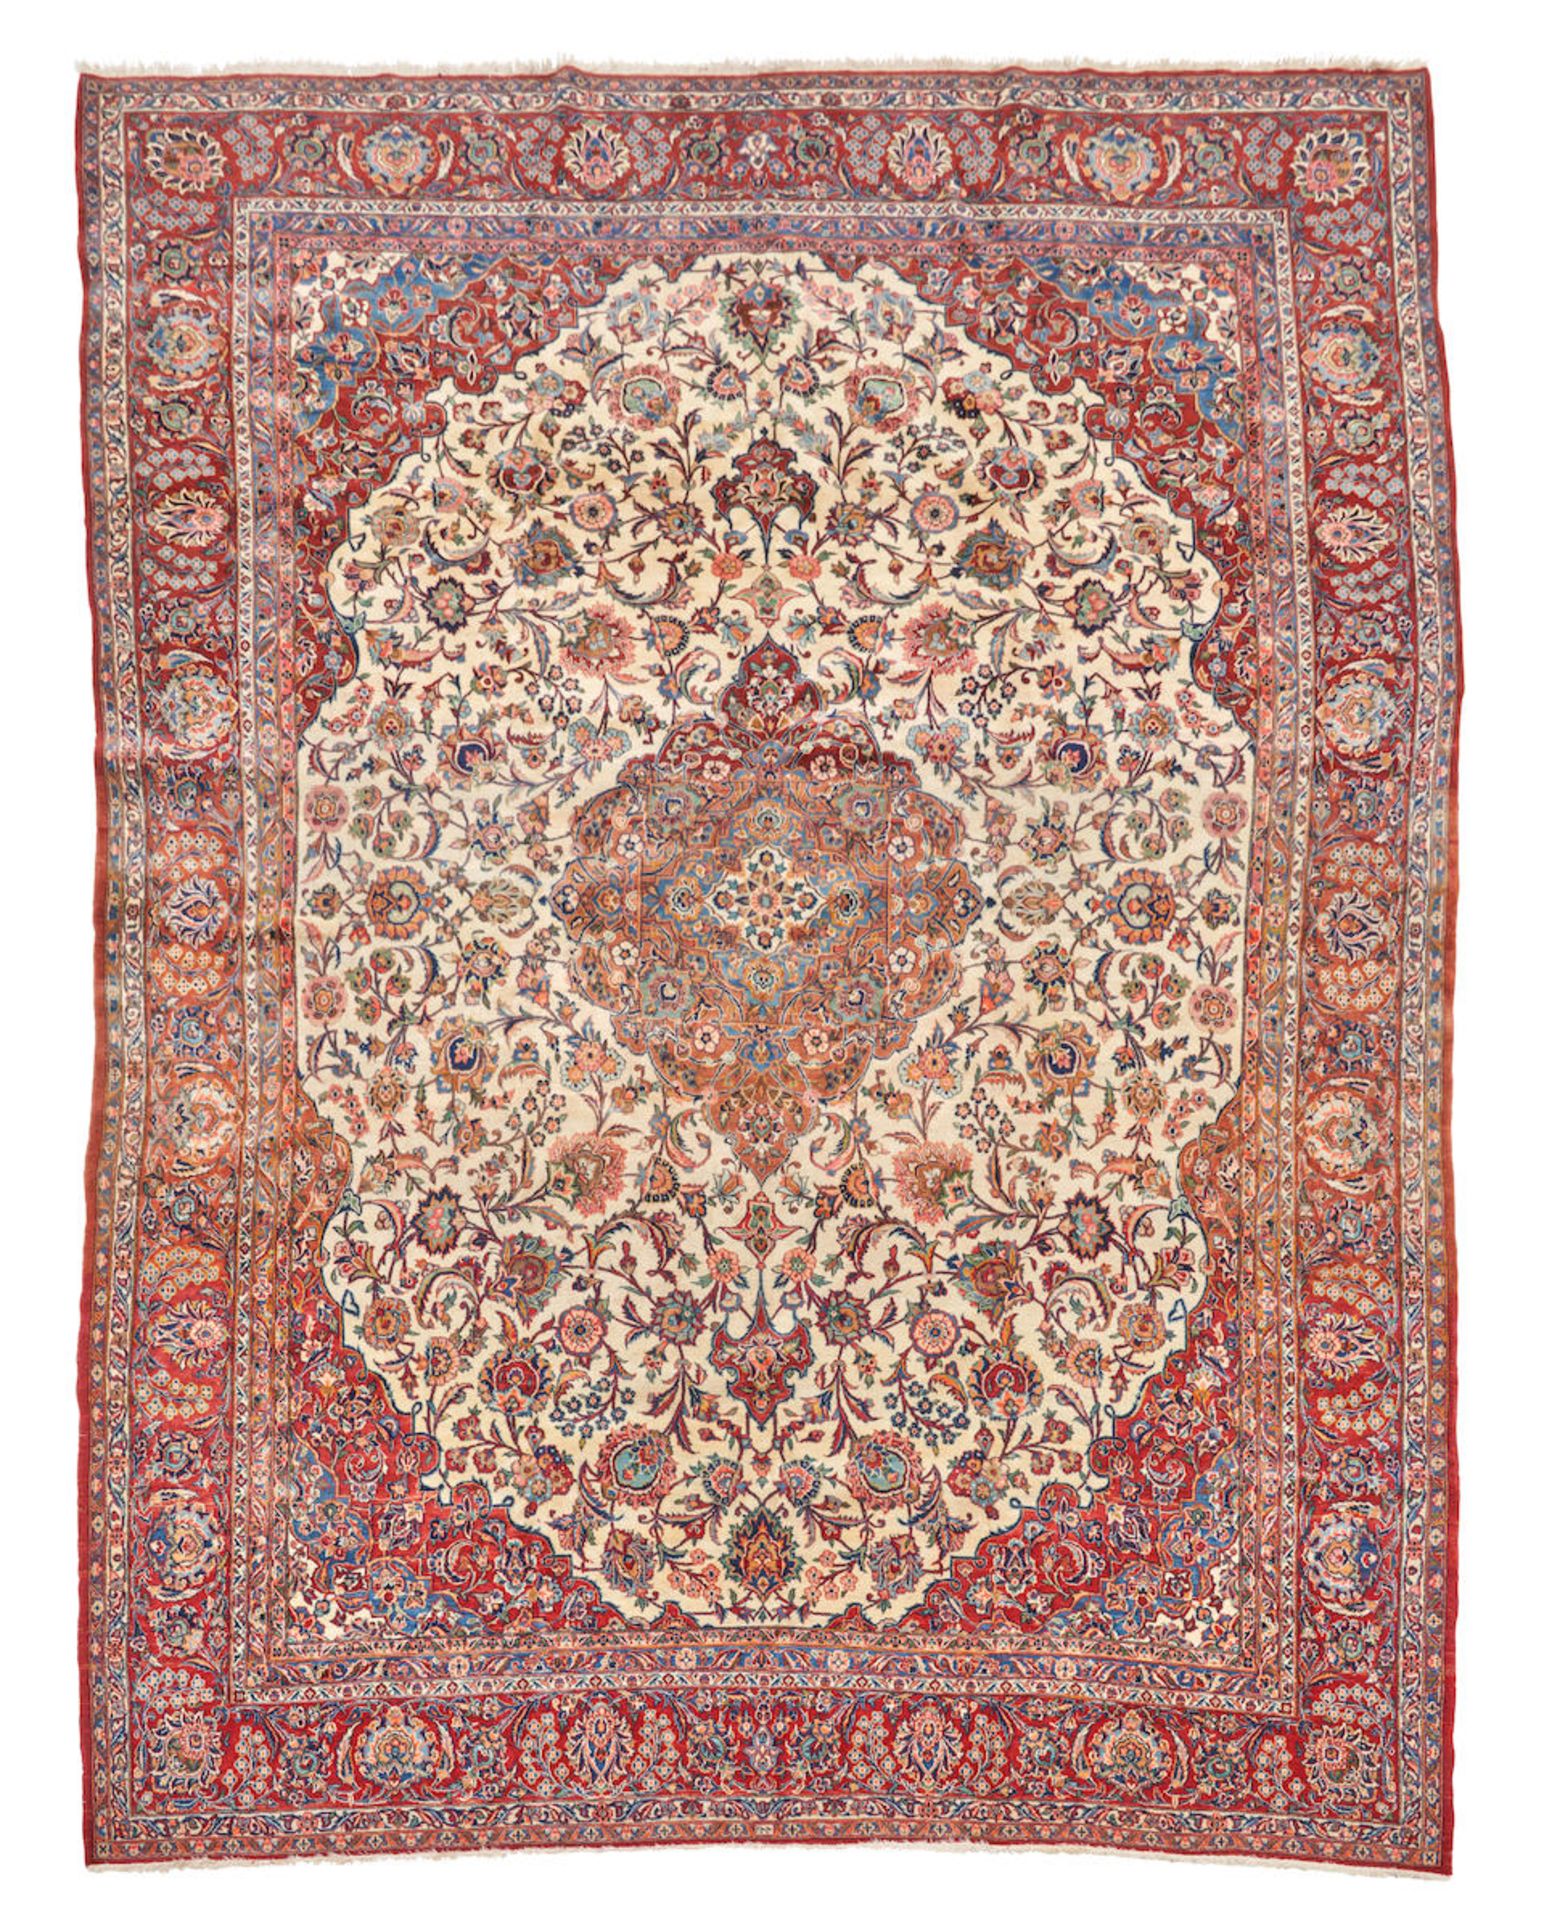 Mohtasham Kashan Carpet Iran 9 ft. 10 in. x 13 ft. 2 in.